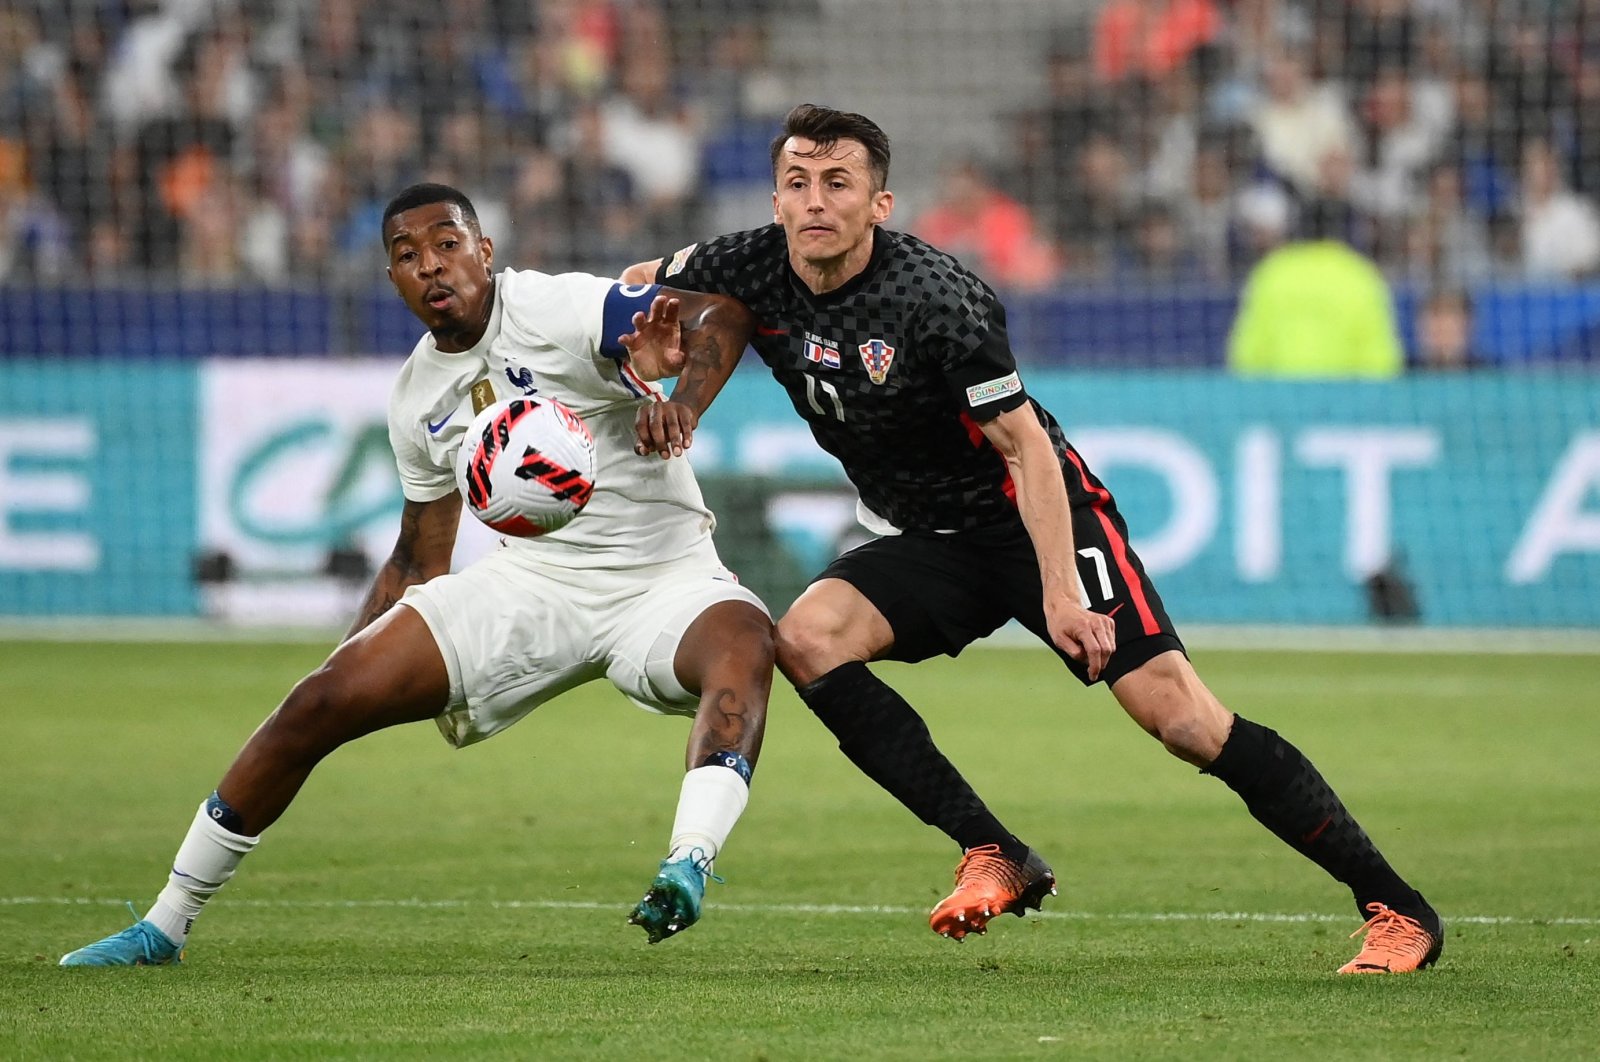 Champ France menghadapi degradasi Nations League setelah Kroasia kalah